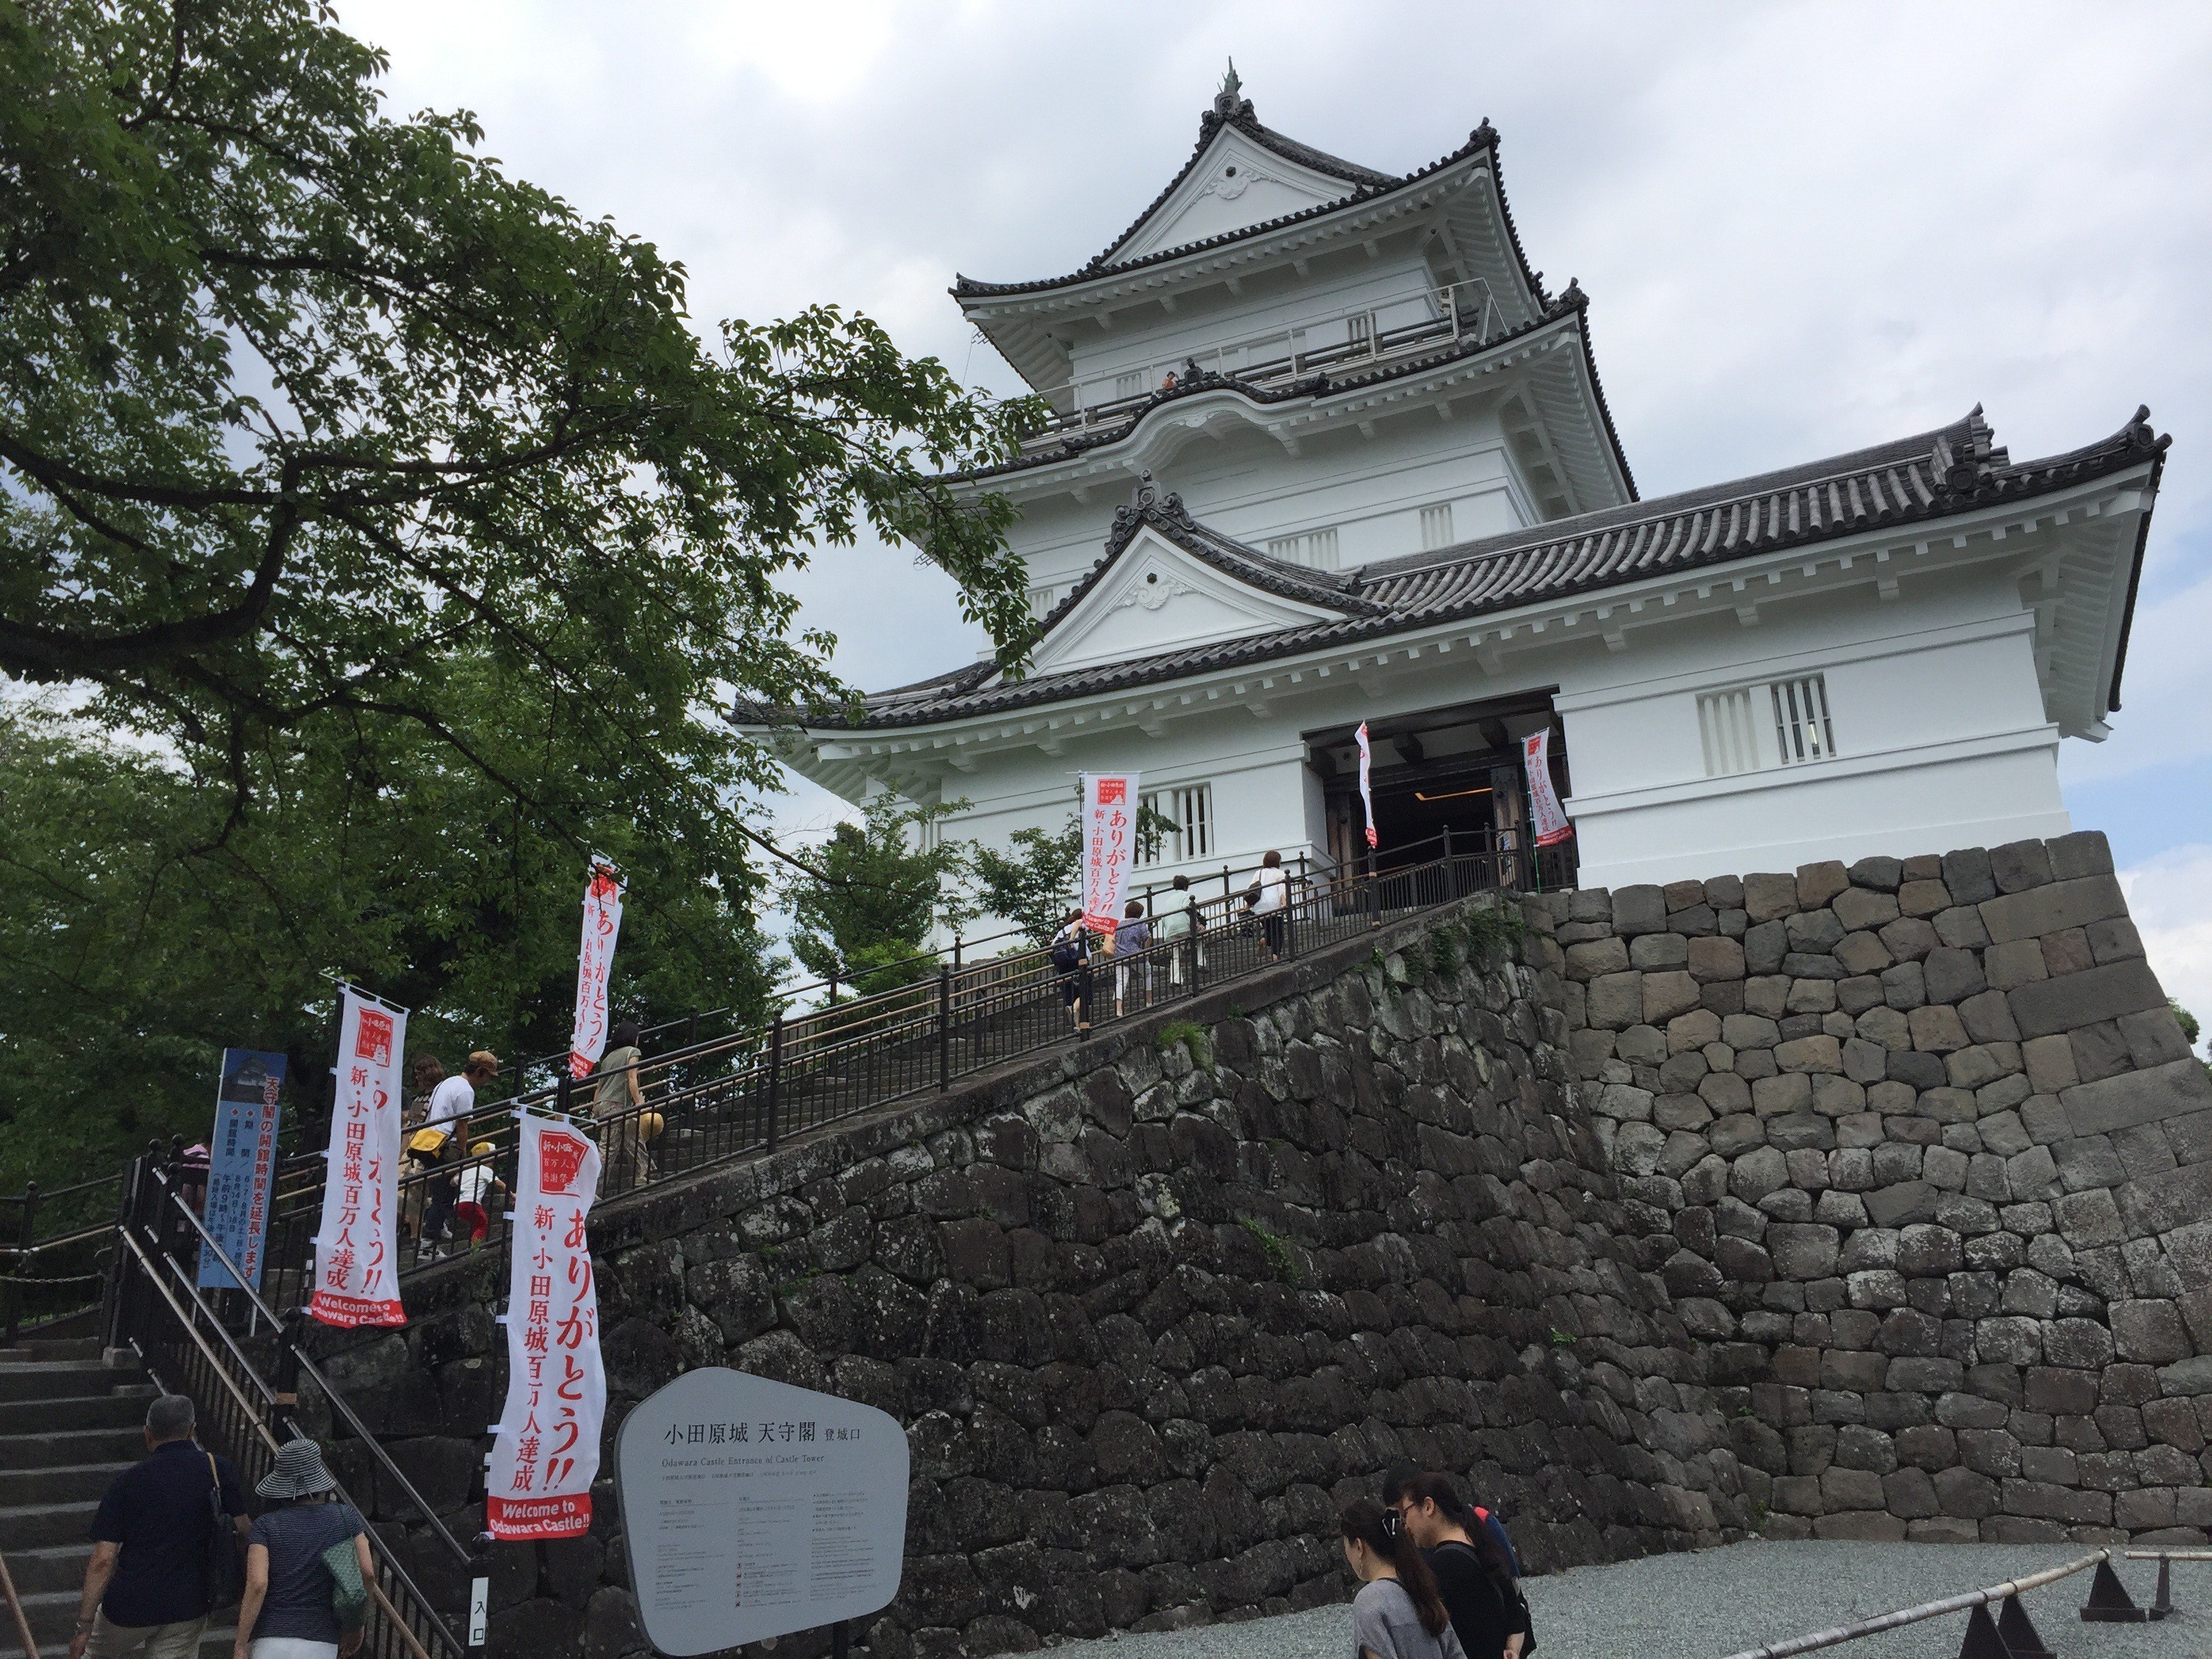 Odawara Castle Kyoto Kanagawa Japan - Nikko Toshogu Shrine Japan Review Blog Guide List View Video 2017 ⛩ 🏯 🌸